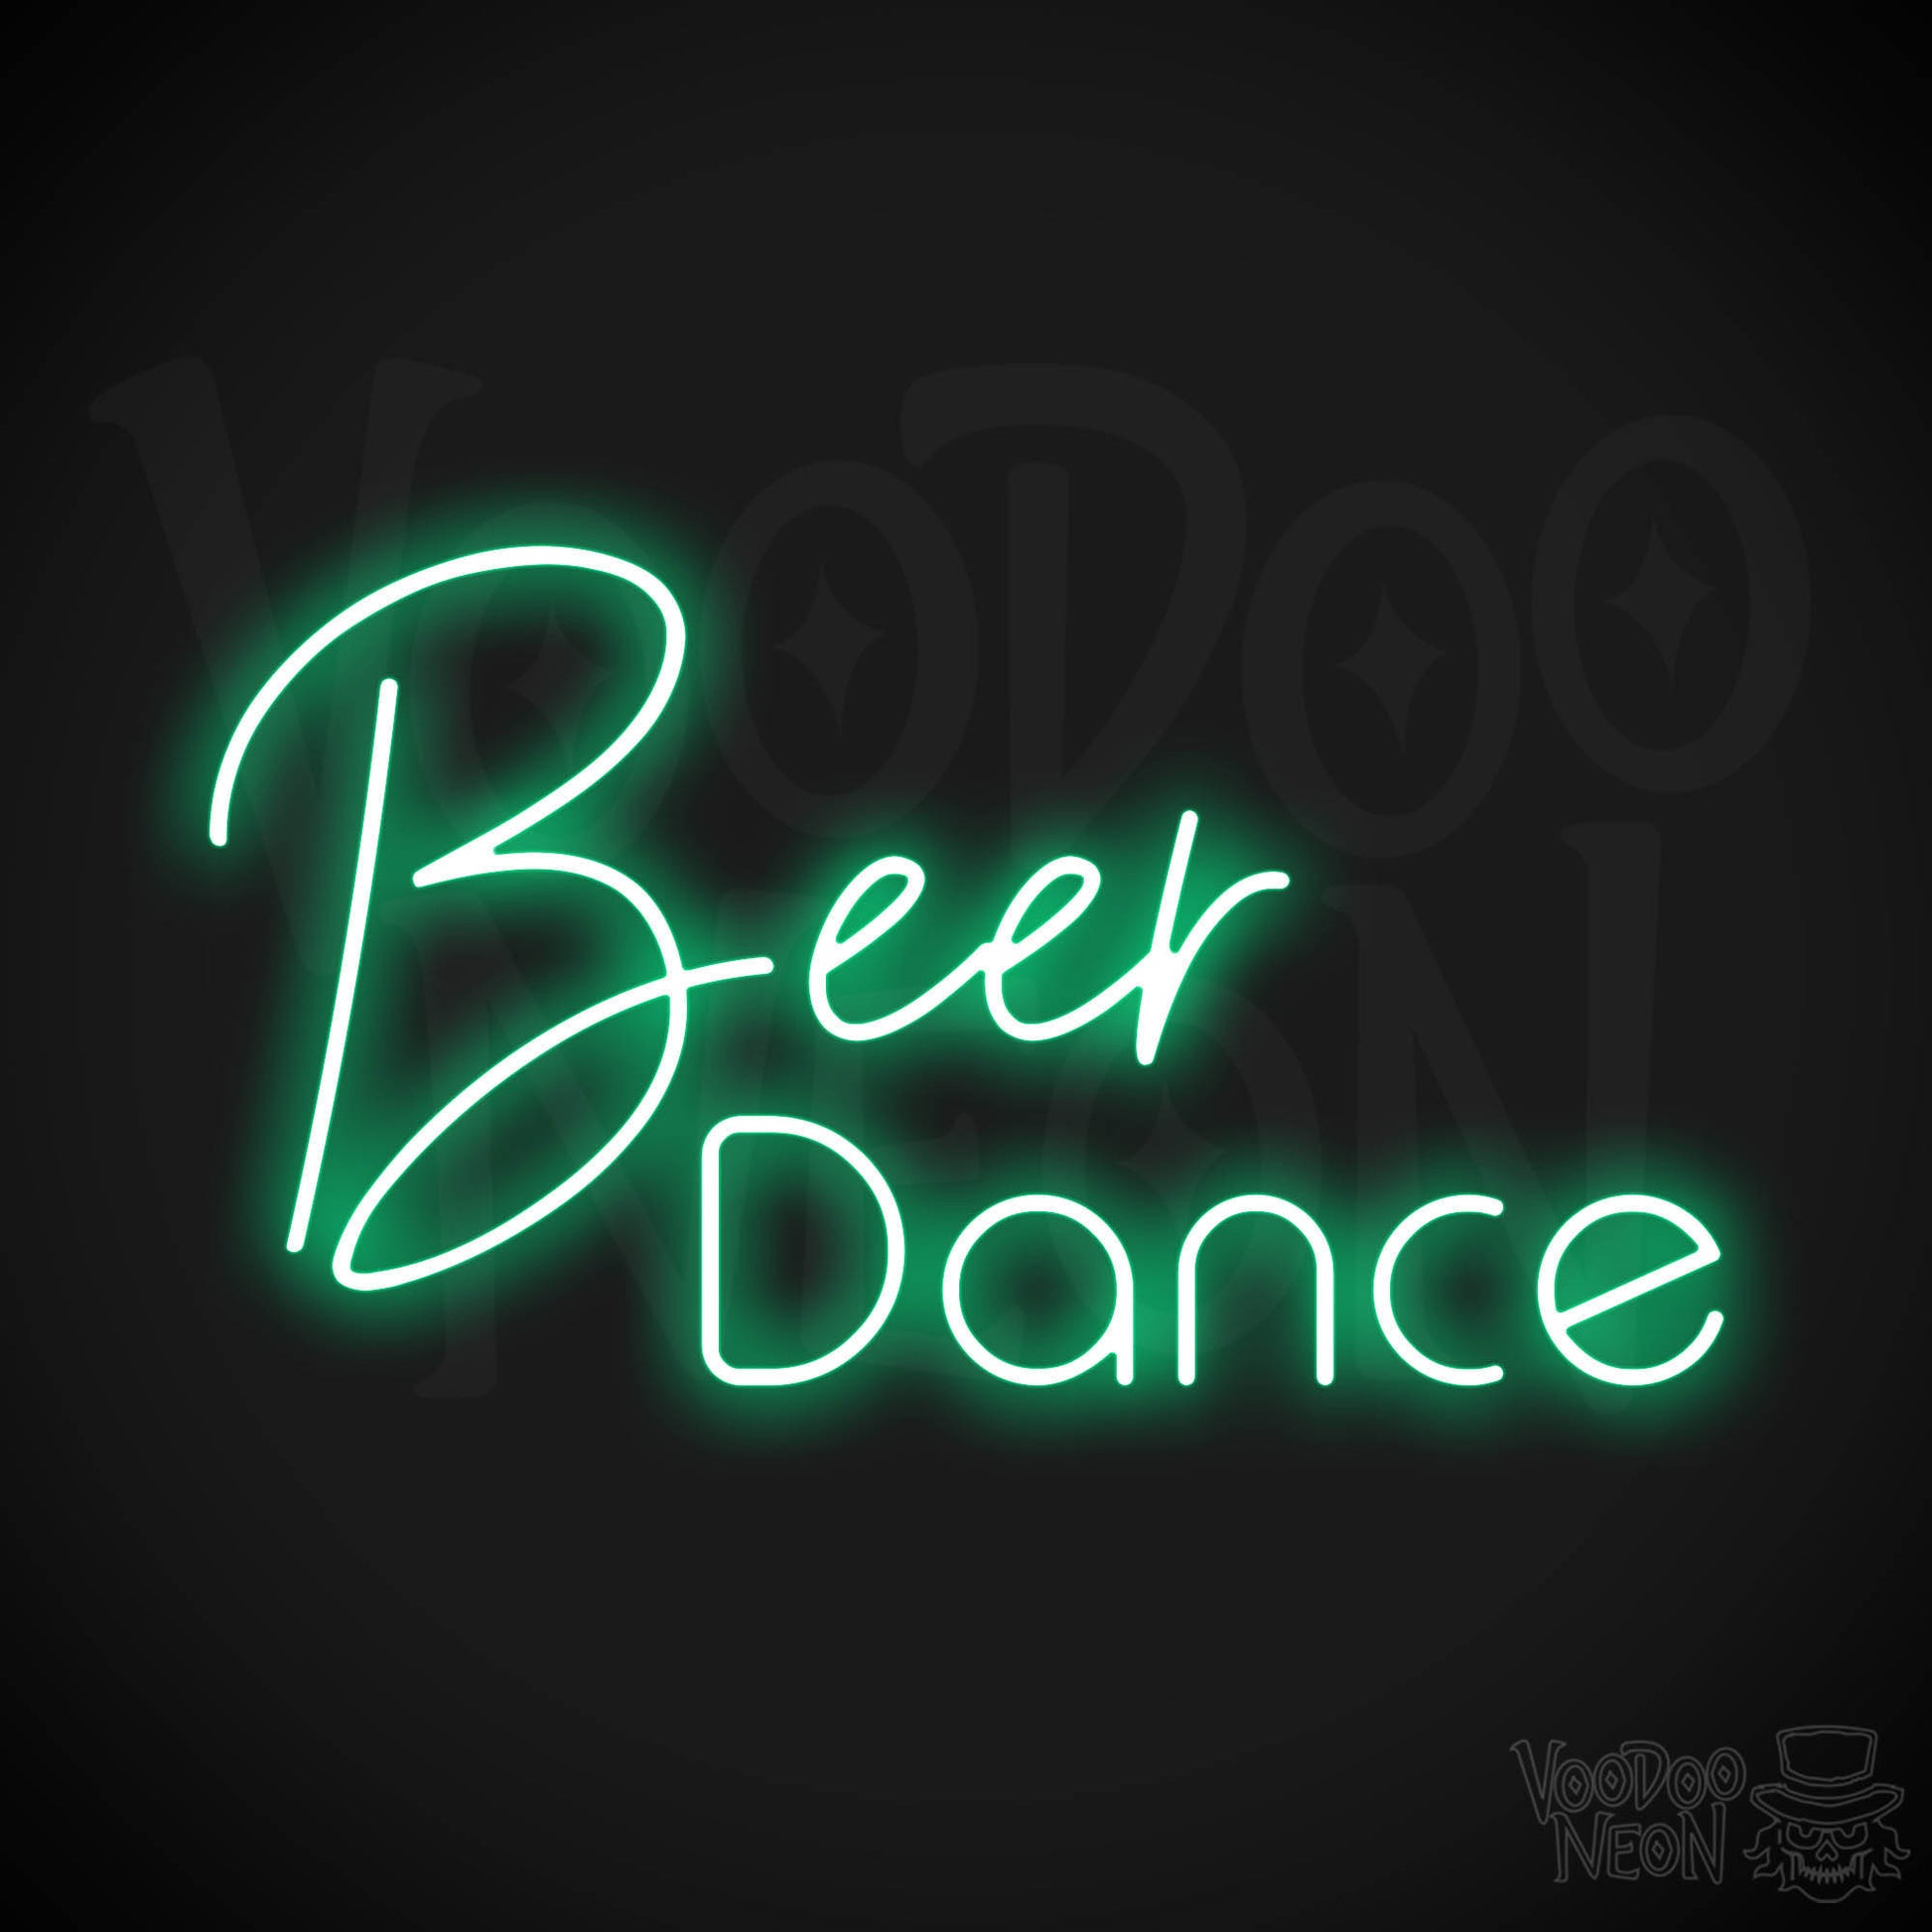 Beer Dance LED Neon - Green